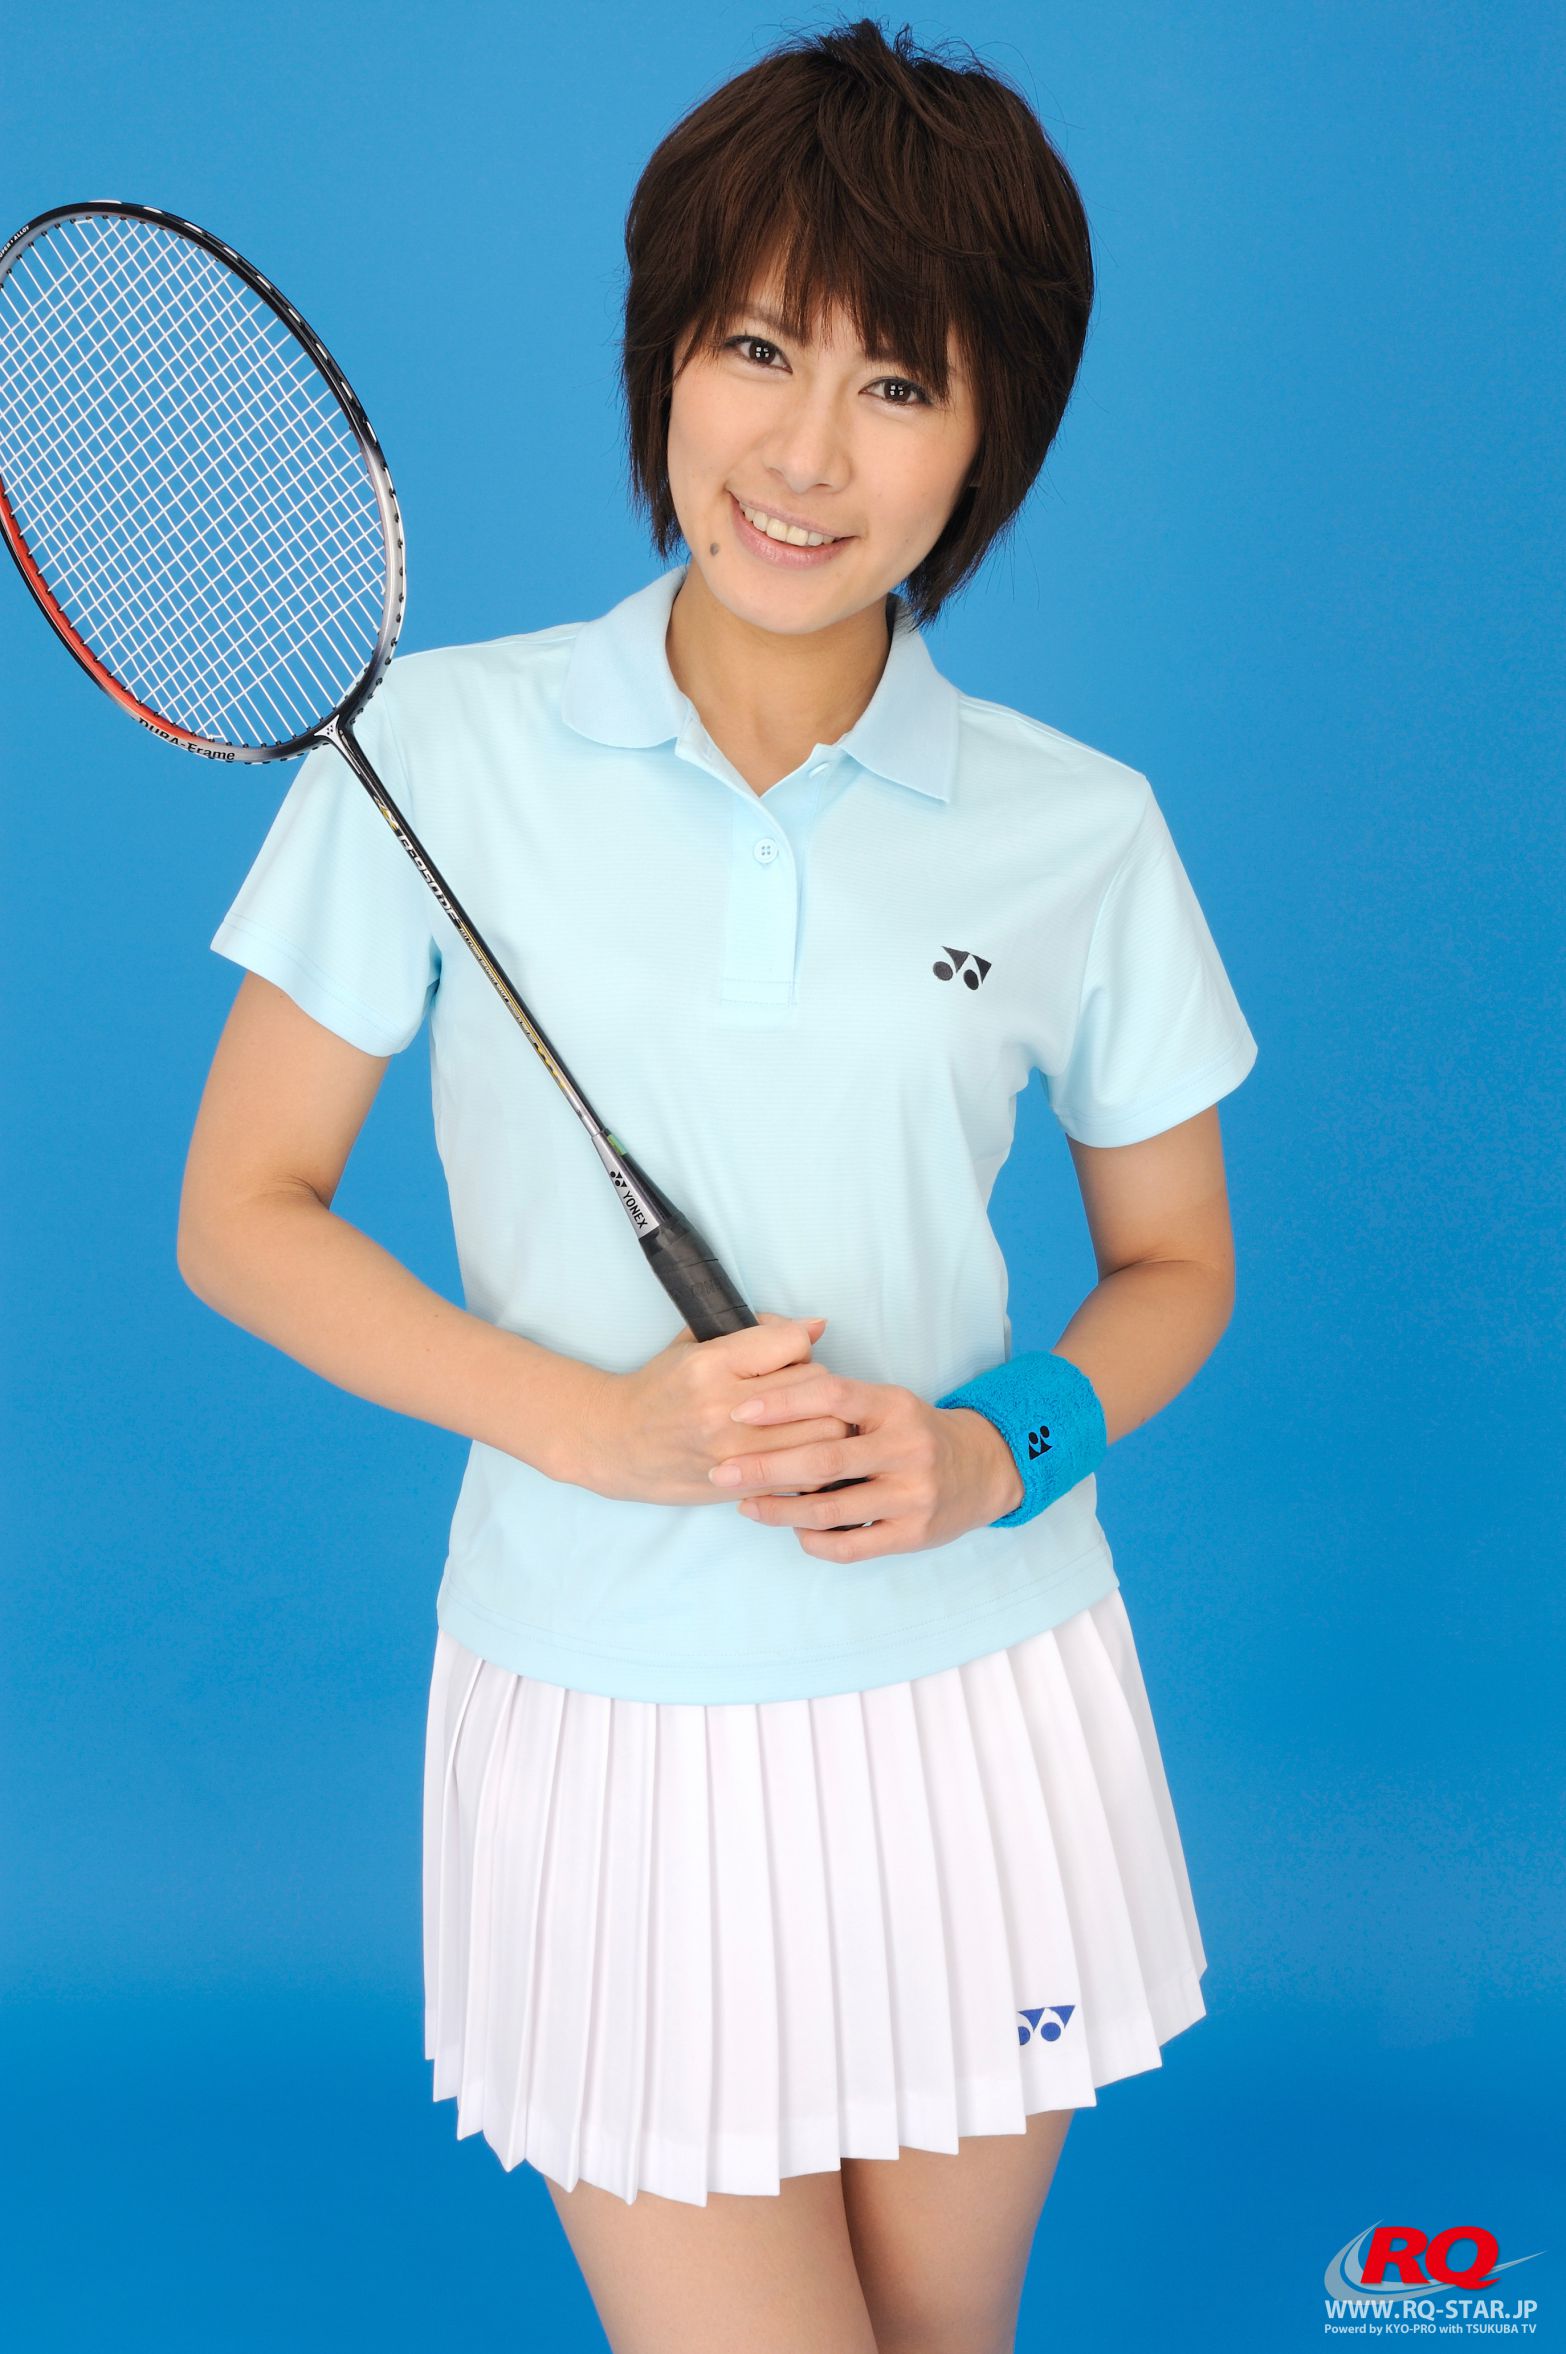 [RQ-STAR] NO.00081 Fujiwara Akiko Badminton Wear Sportswear-Serie Seite 50 No.8fc4ab